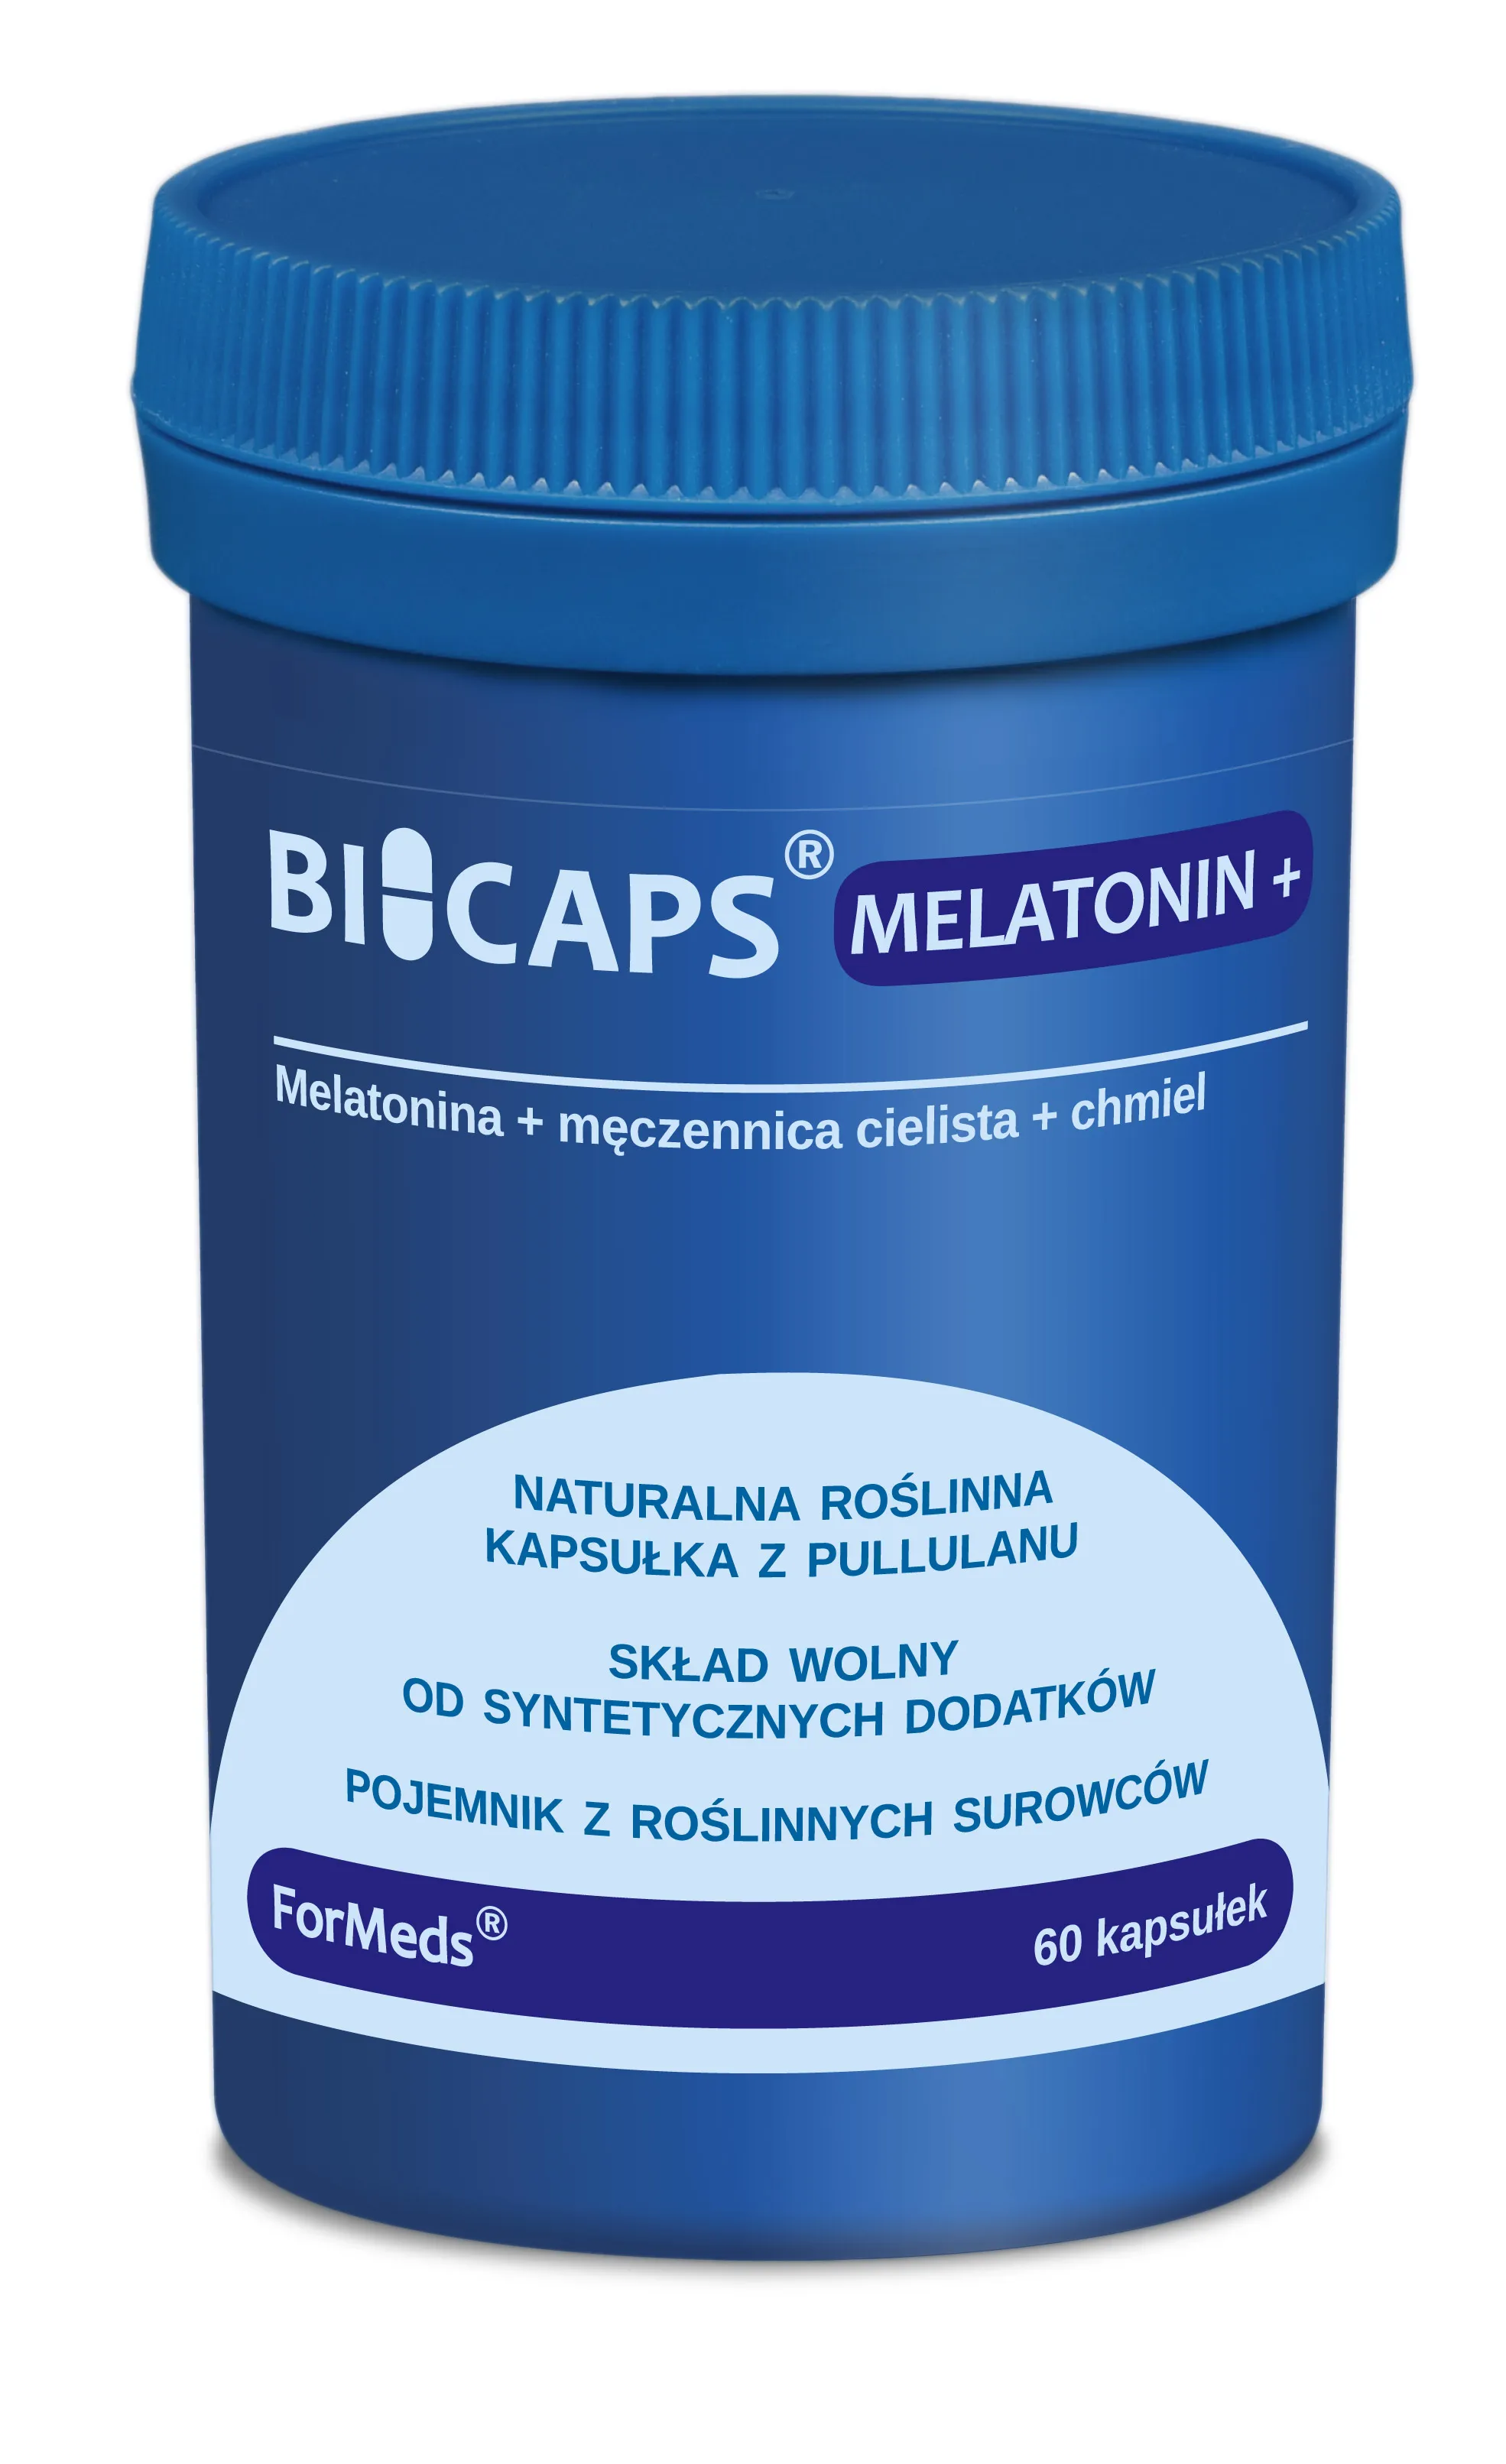 ForMeds Bicaps Melatonin +, suplement diety, 60 kapsułek